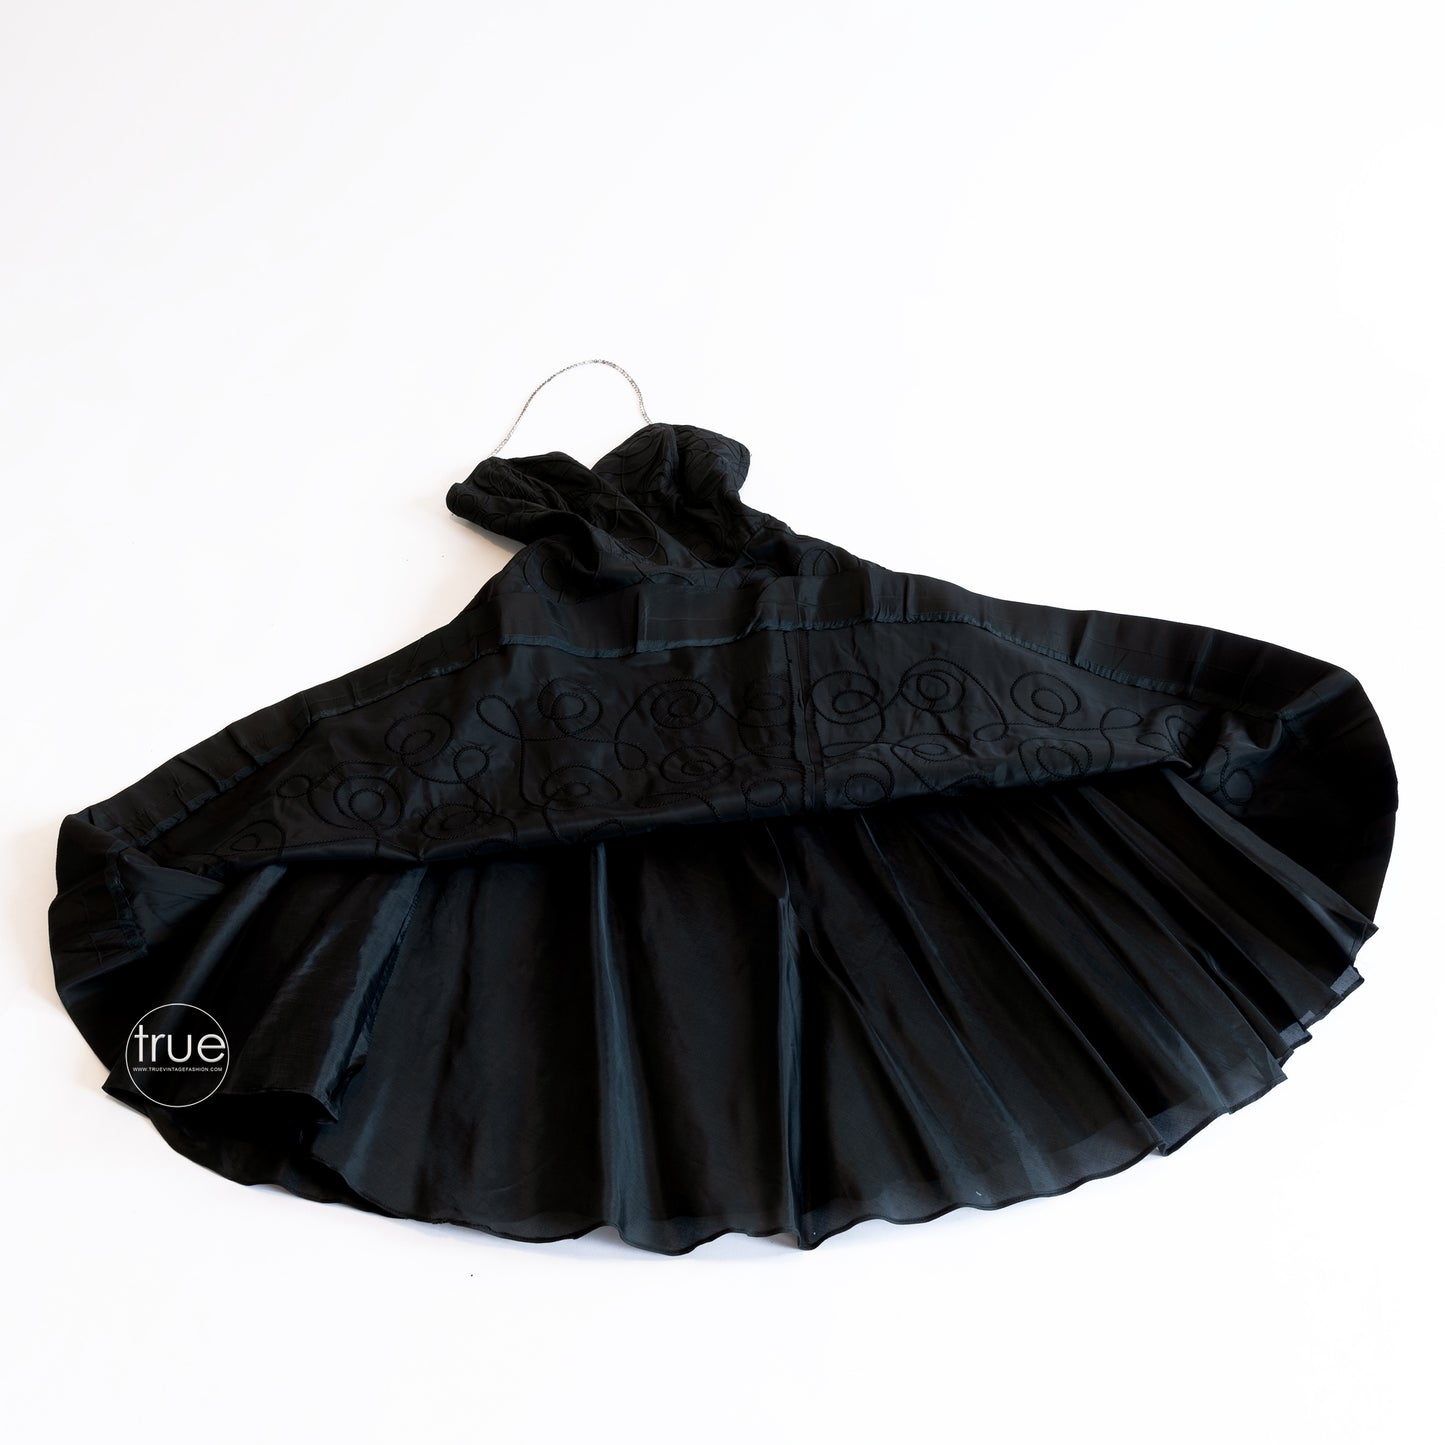 vintage 1950's dress ...classic Suzy Perette black corded full skirt dress & bolero